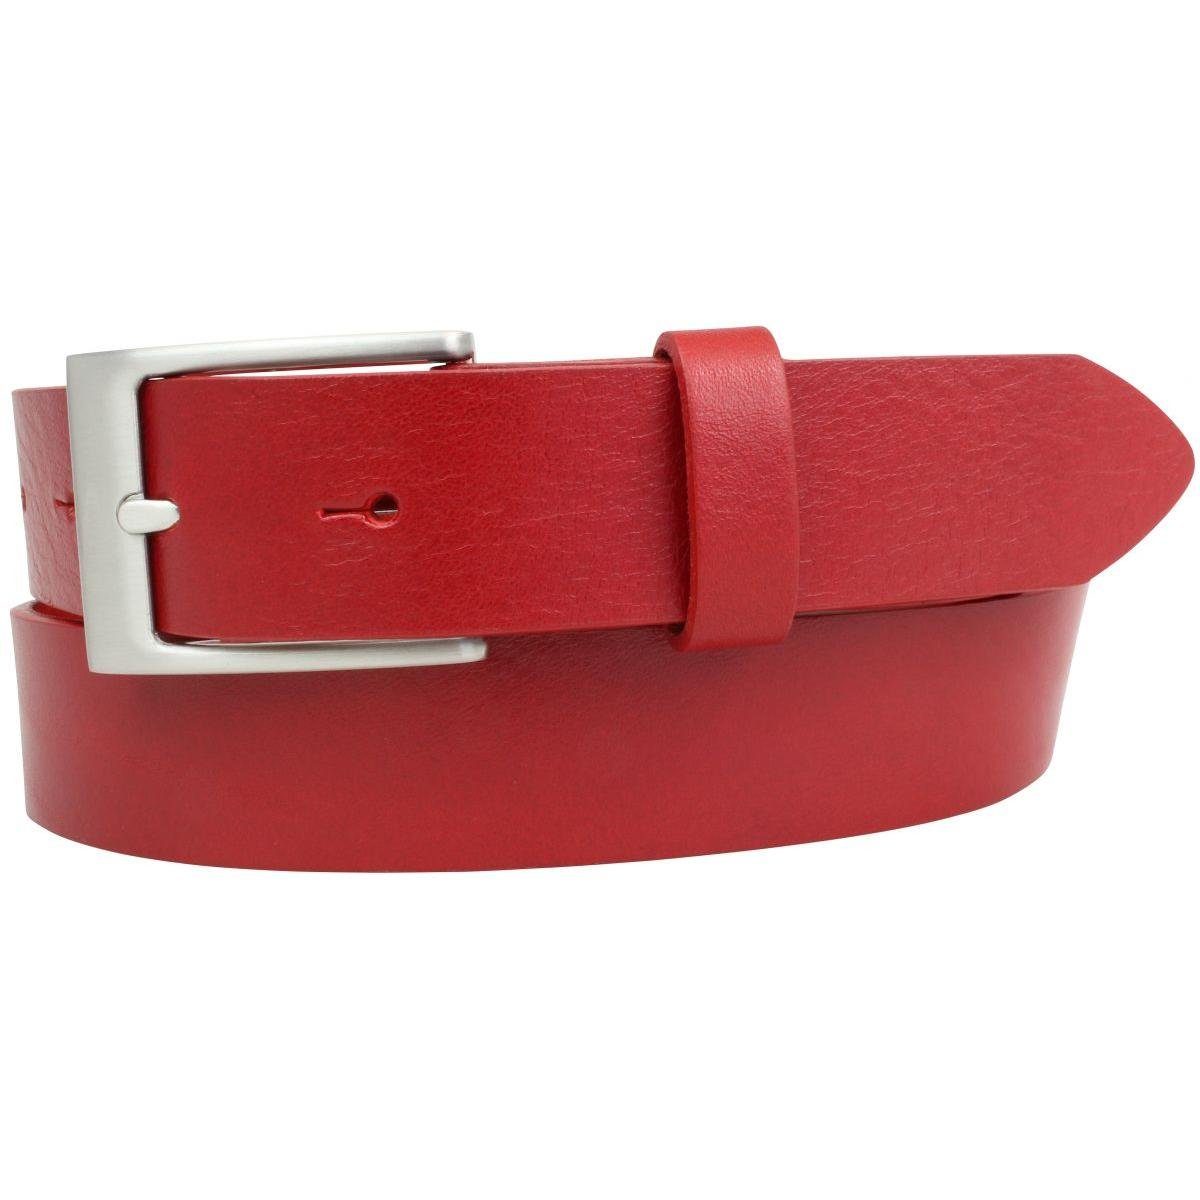 BELTINGER Ledergürtel Kinder-Gürtel aus Vollrindleder 3 cm - Leder-Gürtel für Jungen Mädchen Rot, Silber